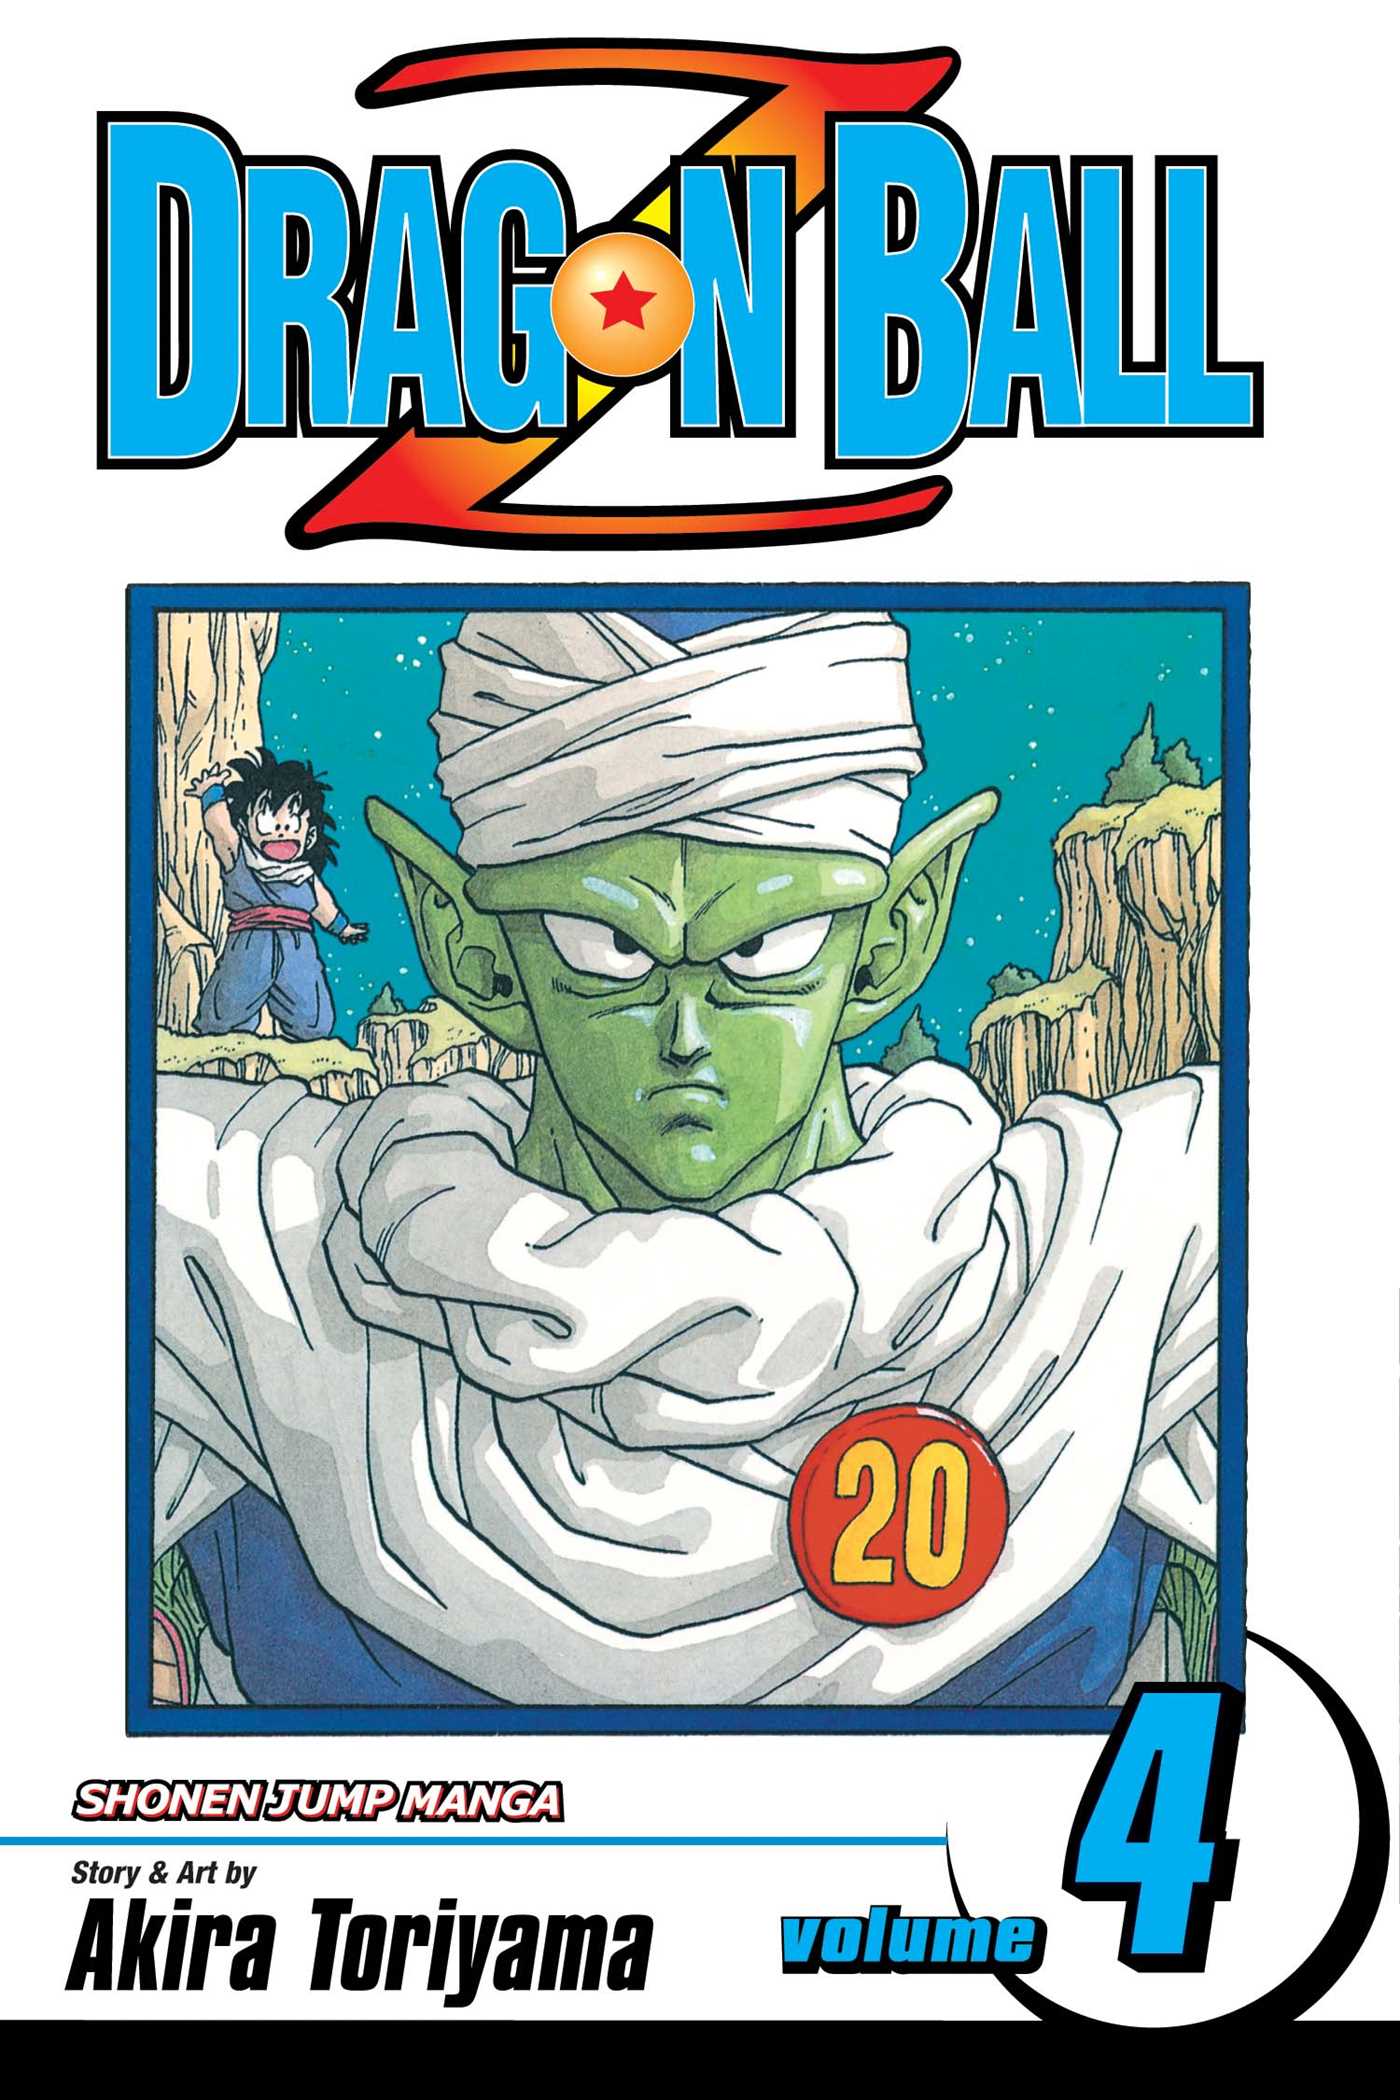 Goku & Vegeta - Manga Panels | Poster